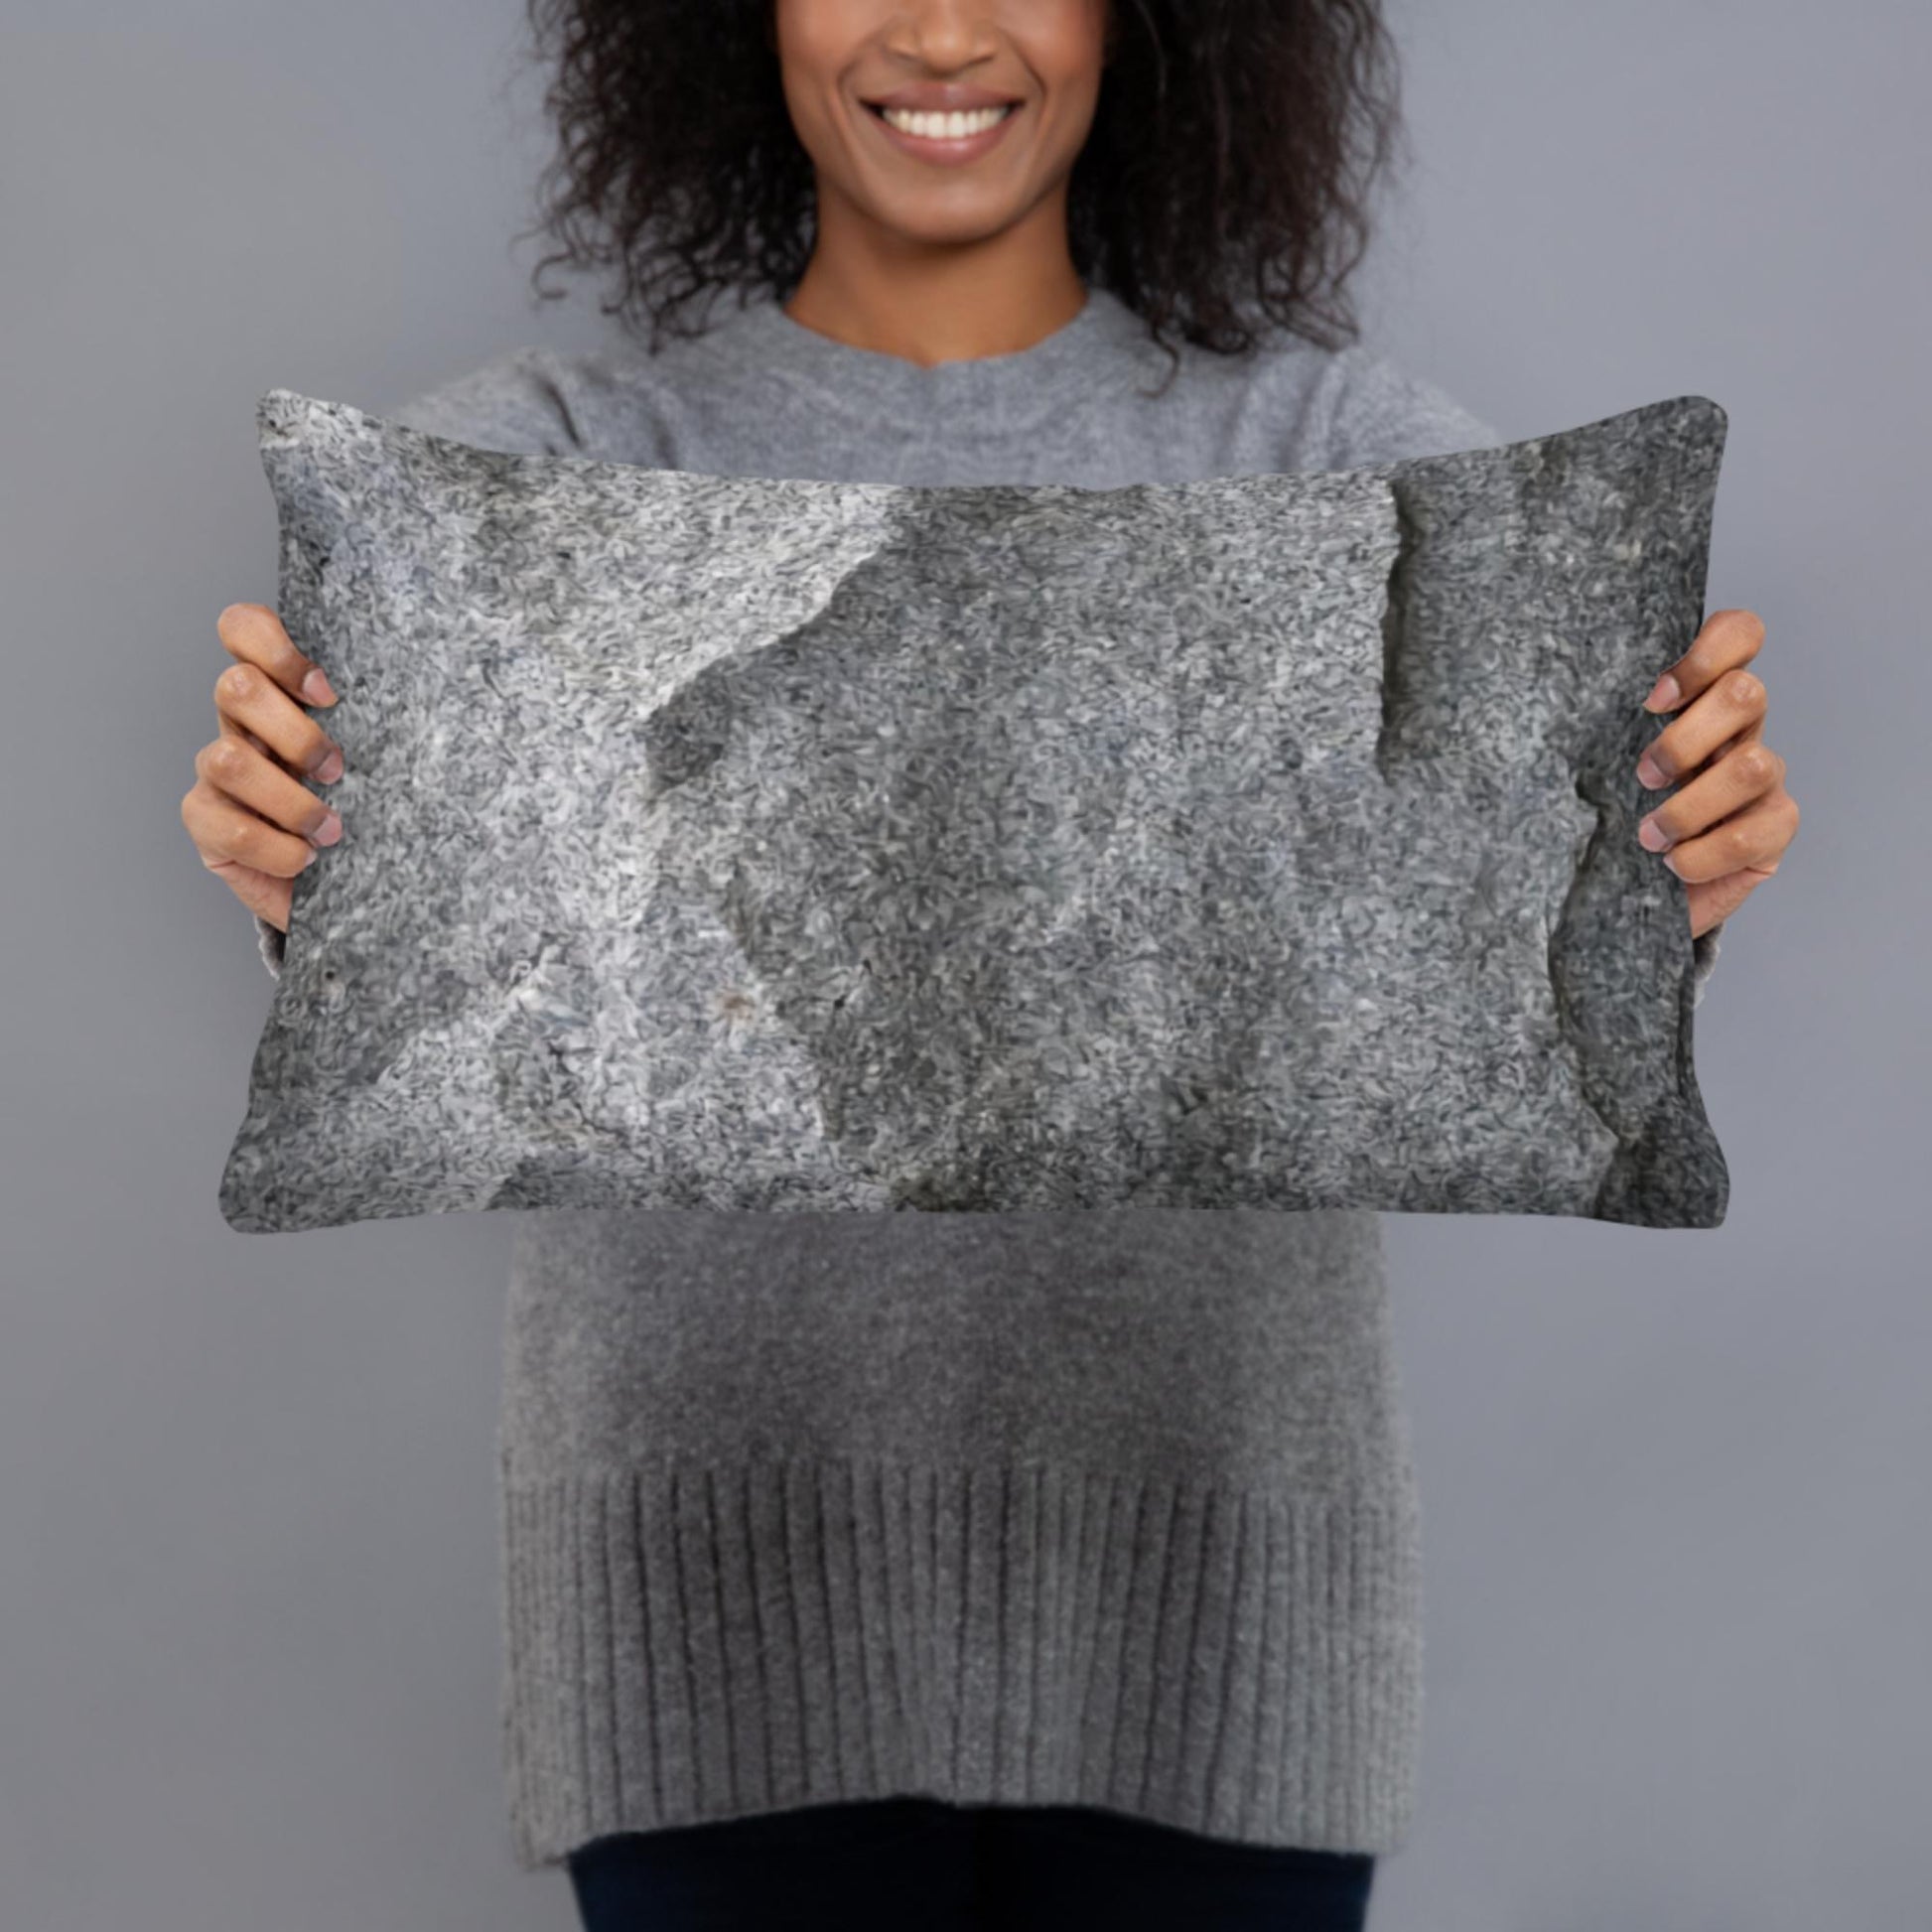 Transform Your Home Decor with the Unique Charm of our Basic Rock Pillow - Lizard Vigilante